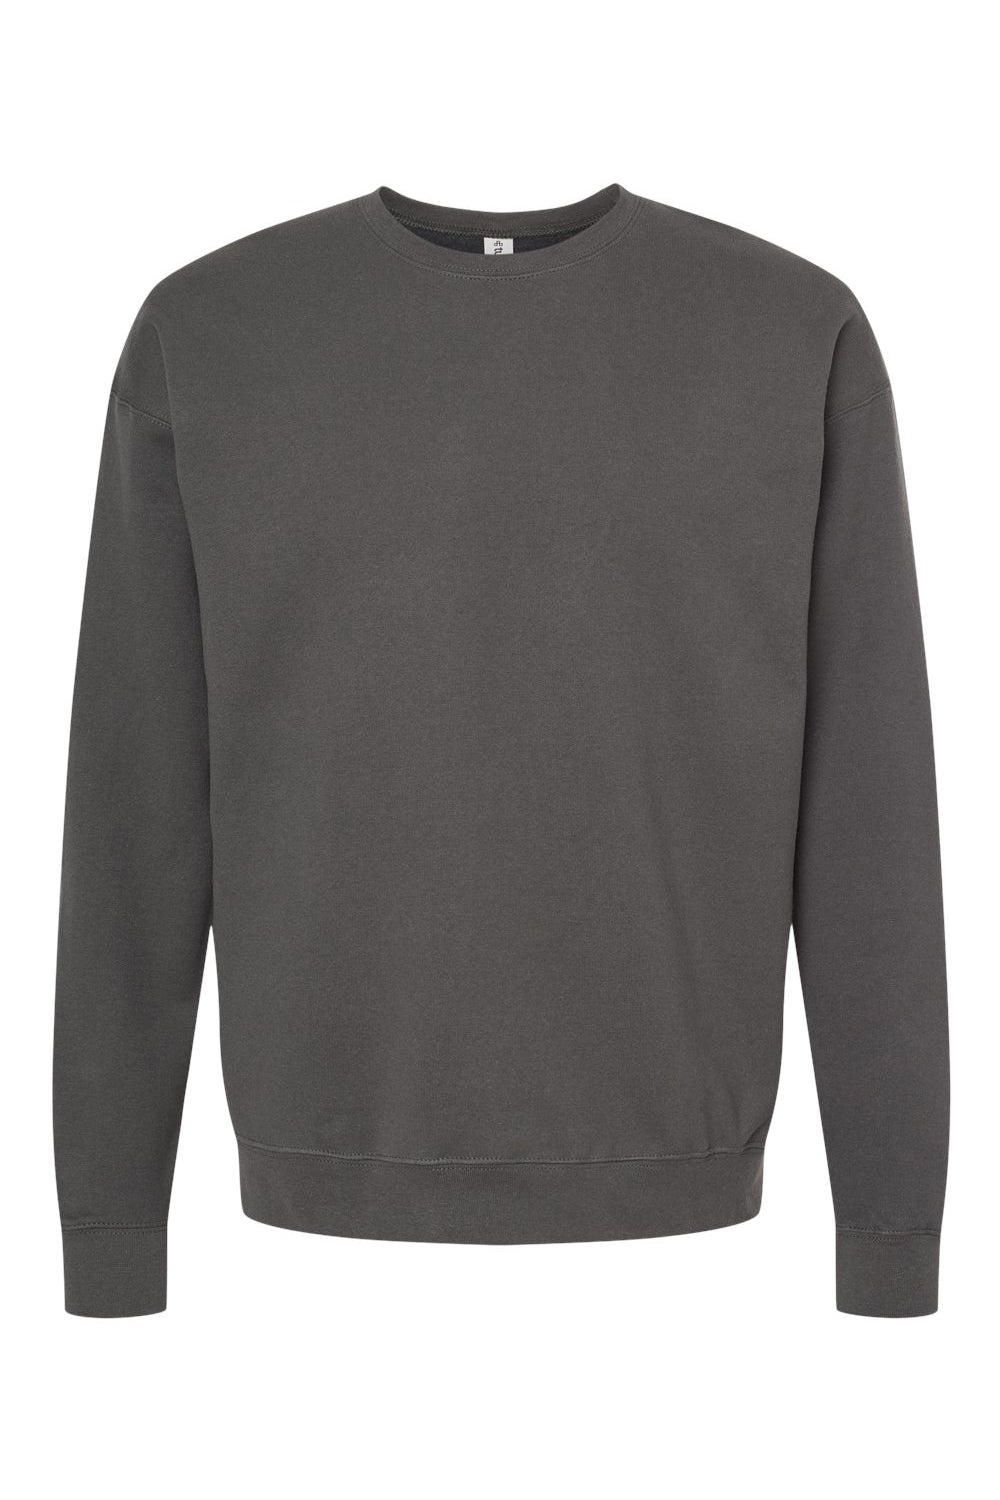 Tultex 340 Mens Fleece Crewneck Sweatshirt Charcoal Grey Flat Front